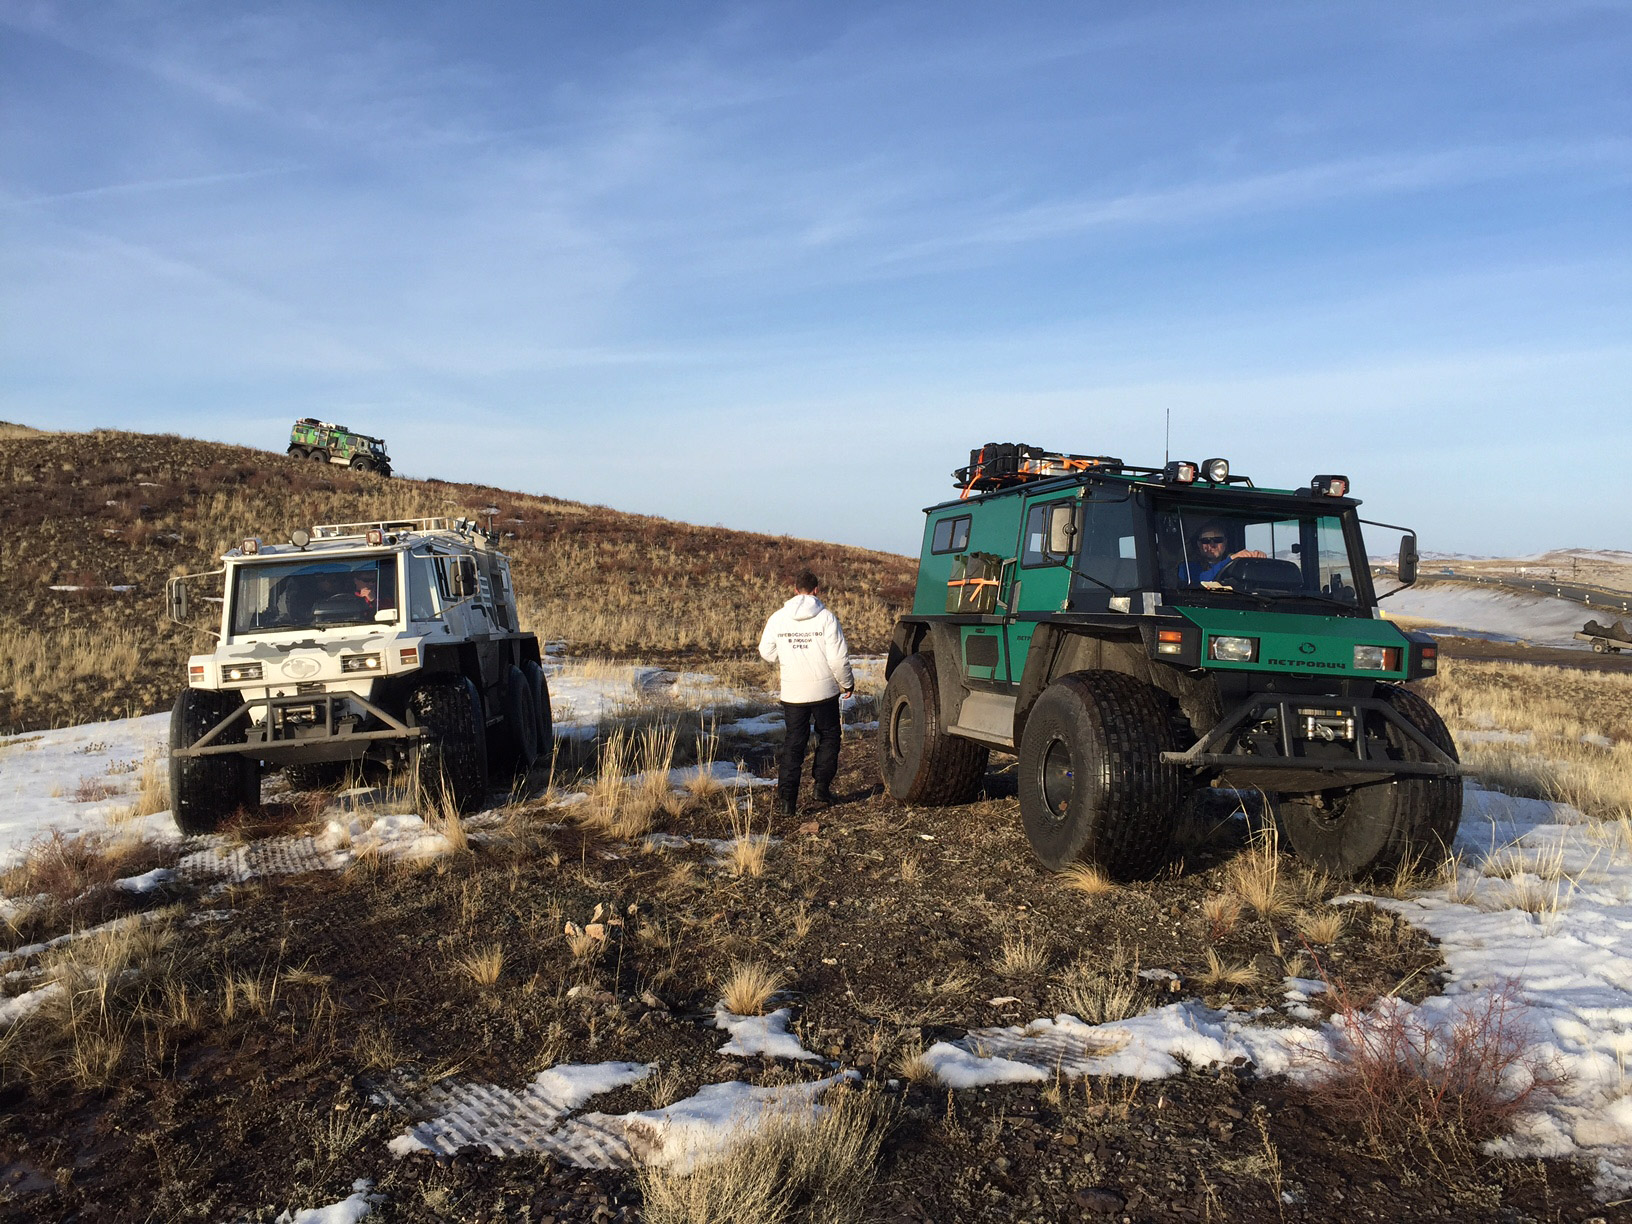 All-terrain vehicles make their way to the landing site about 100km outside Karaganda, Kazakhstan, Feb. 29, 2016.